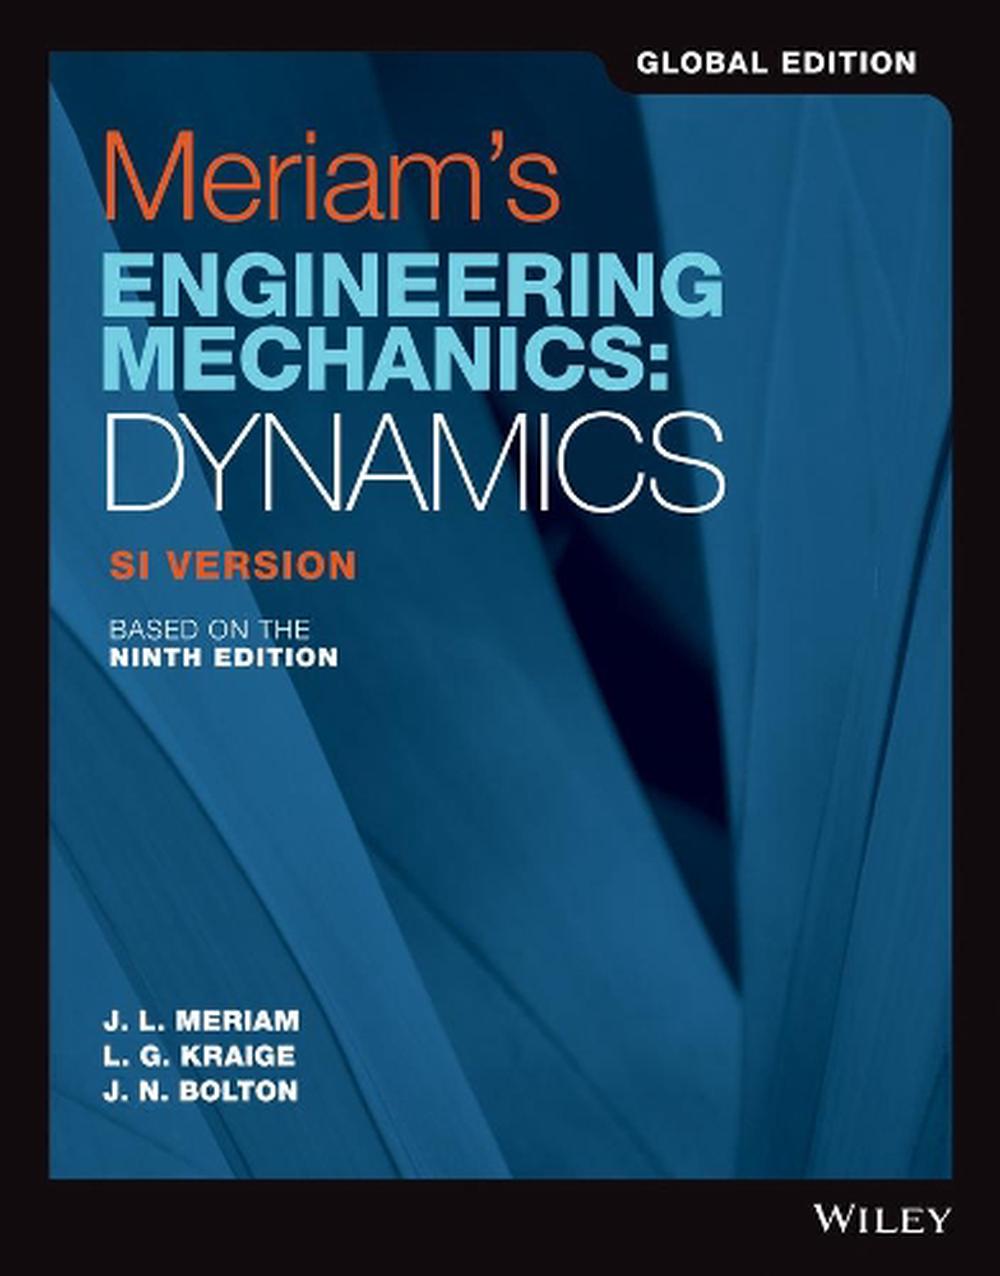 Meriam's Engineering Mechanics Dynamics SI Version by James L. Meriam